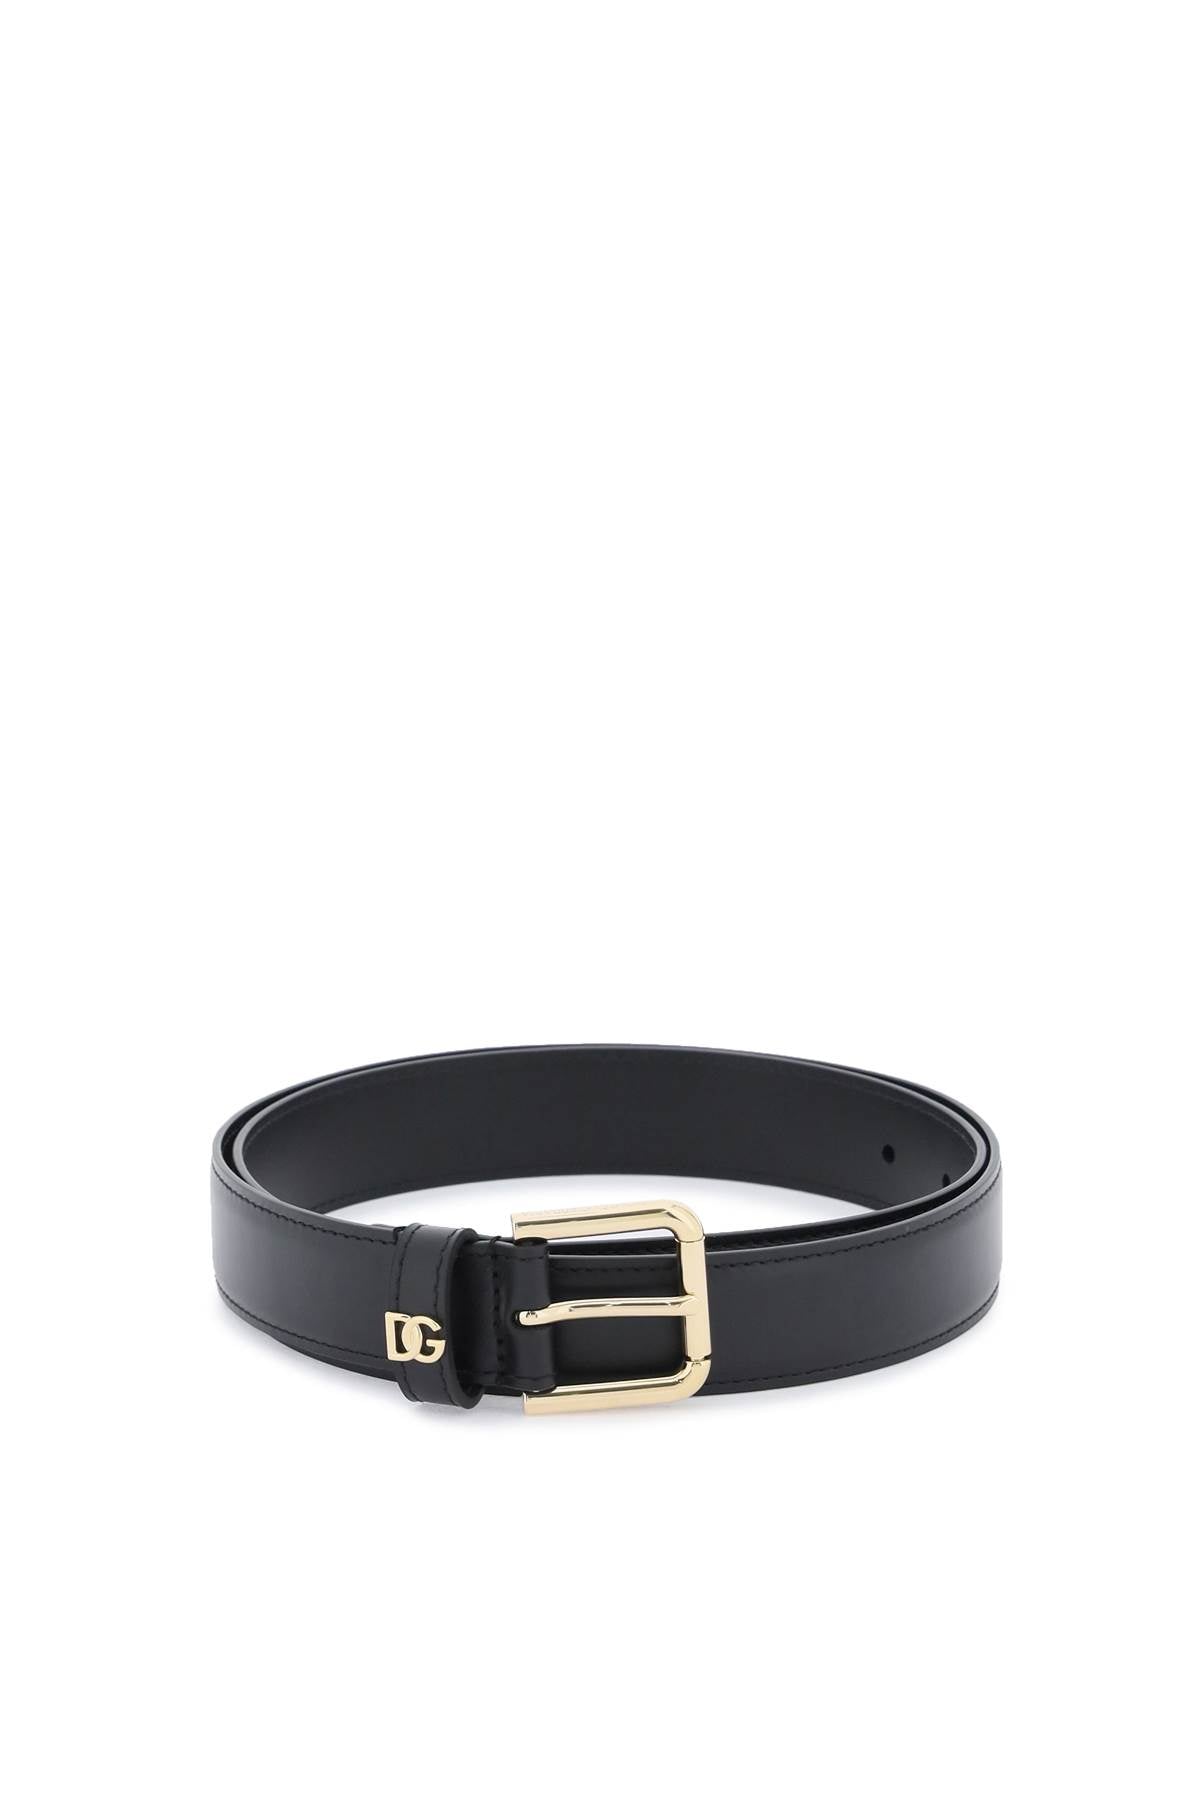 Dolce & gabbana dg logo leather belt-0